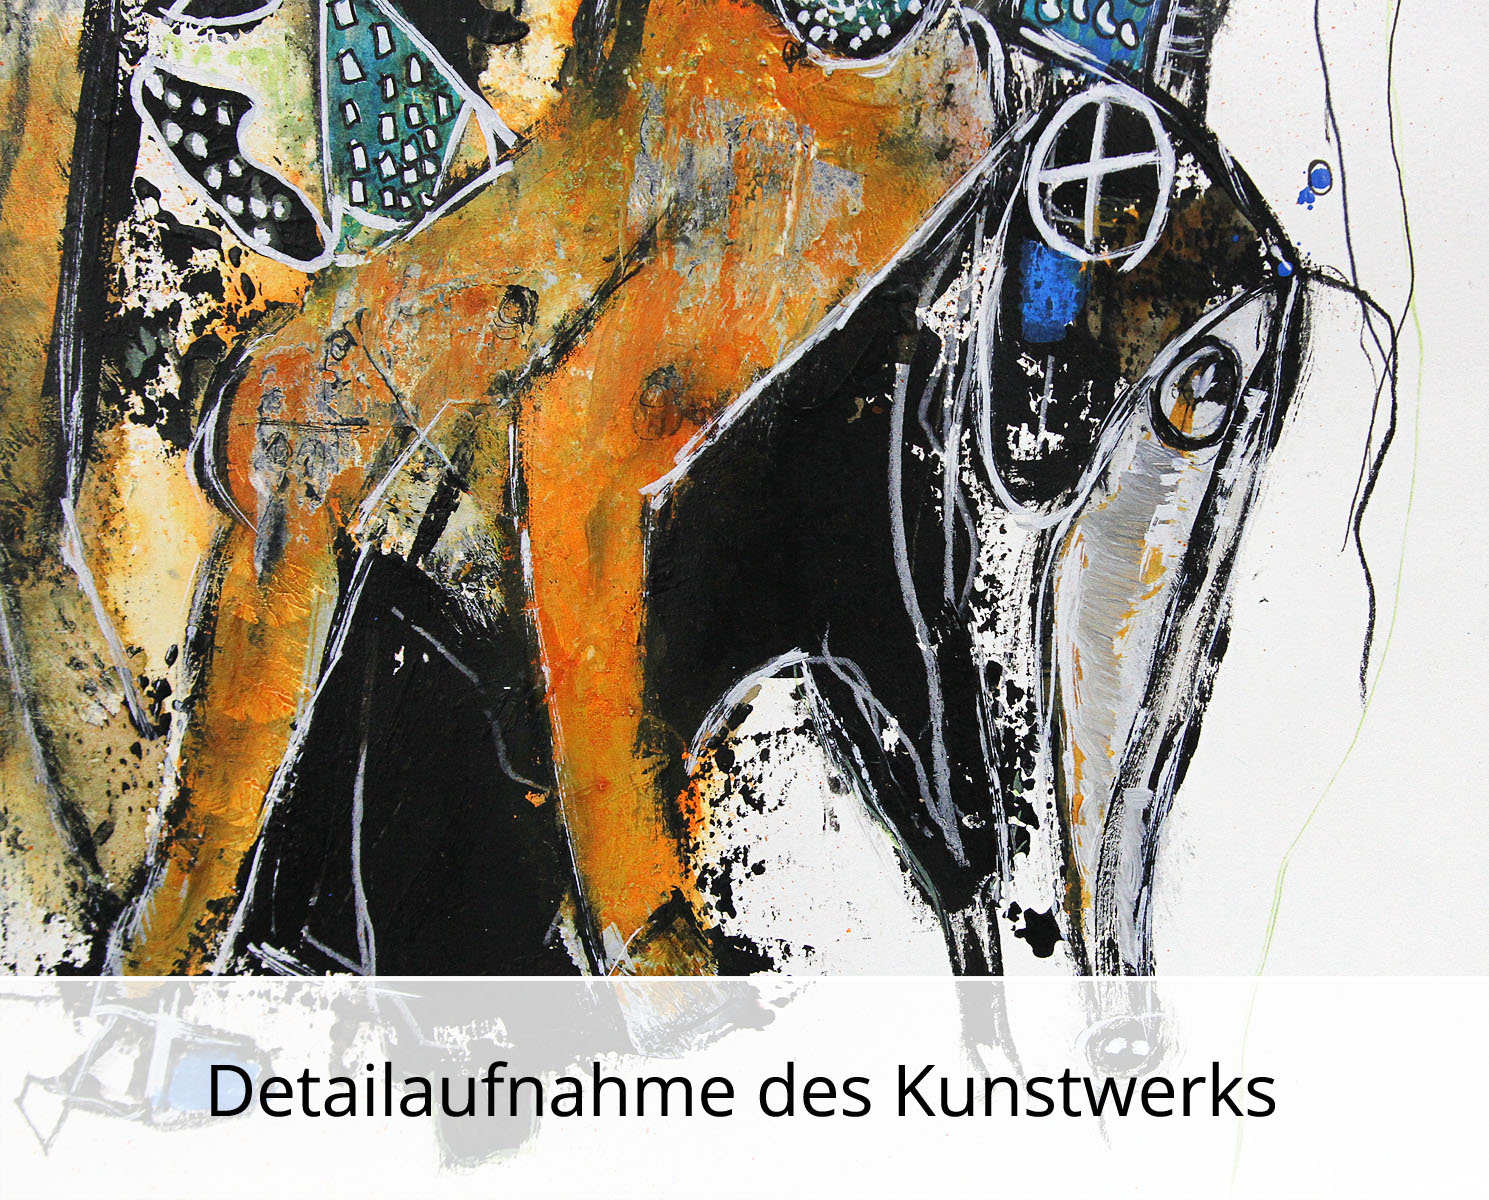 I. Schmidt: Travelling on Elephant, zeitgenössische Grafik/Malerei, Original/Unikat